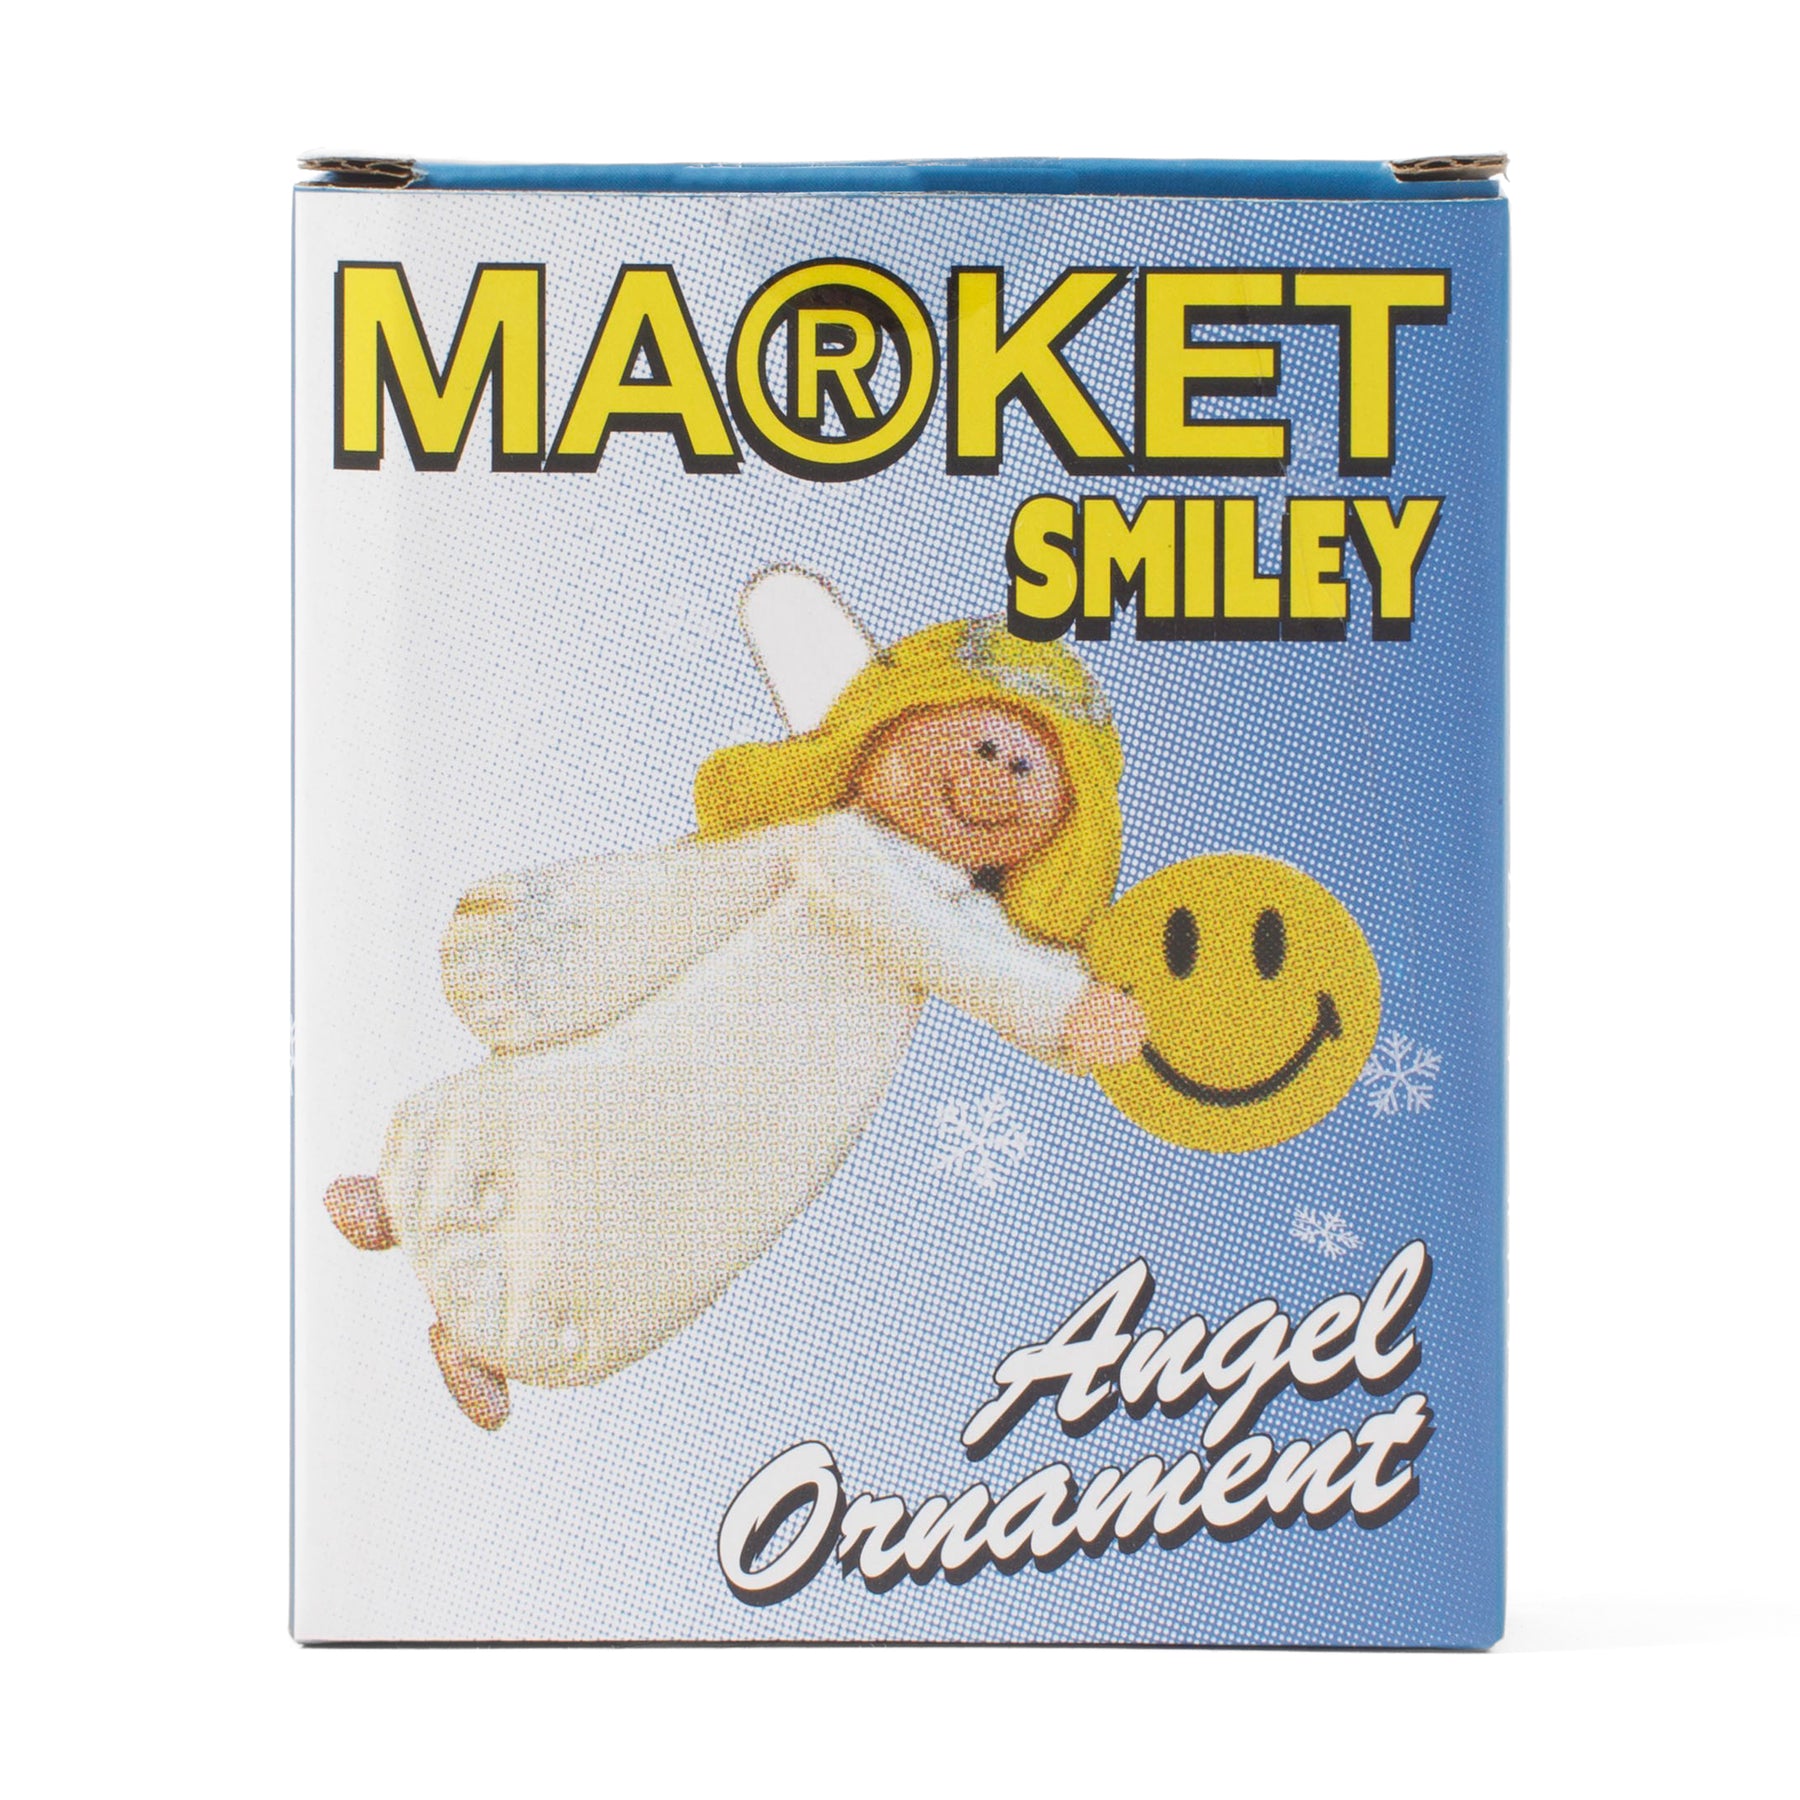 Market Smiley Angel Ornament "Yellow"